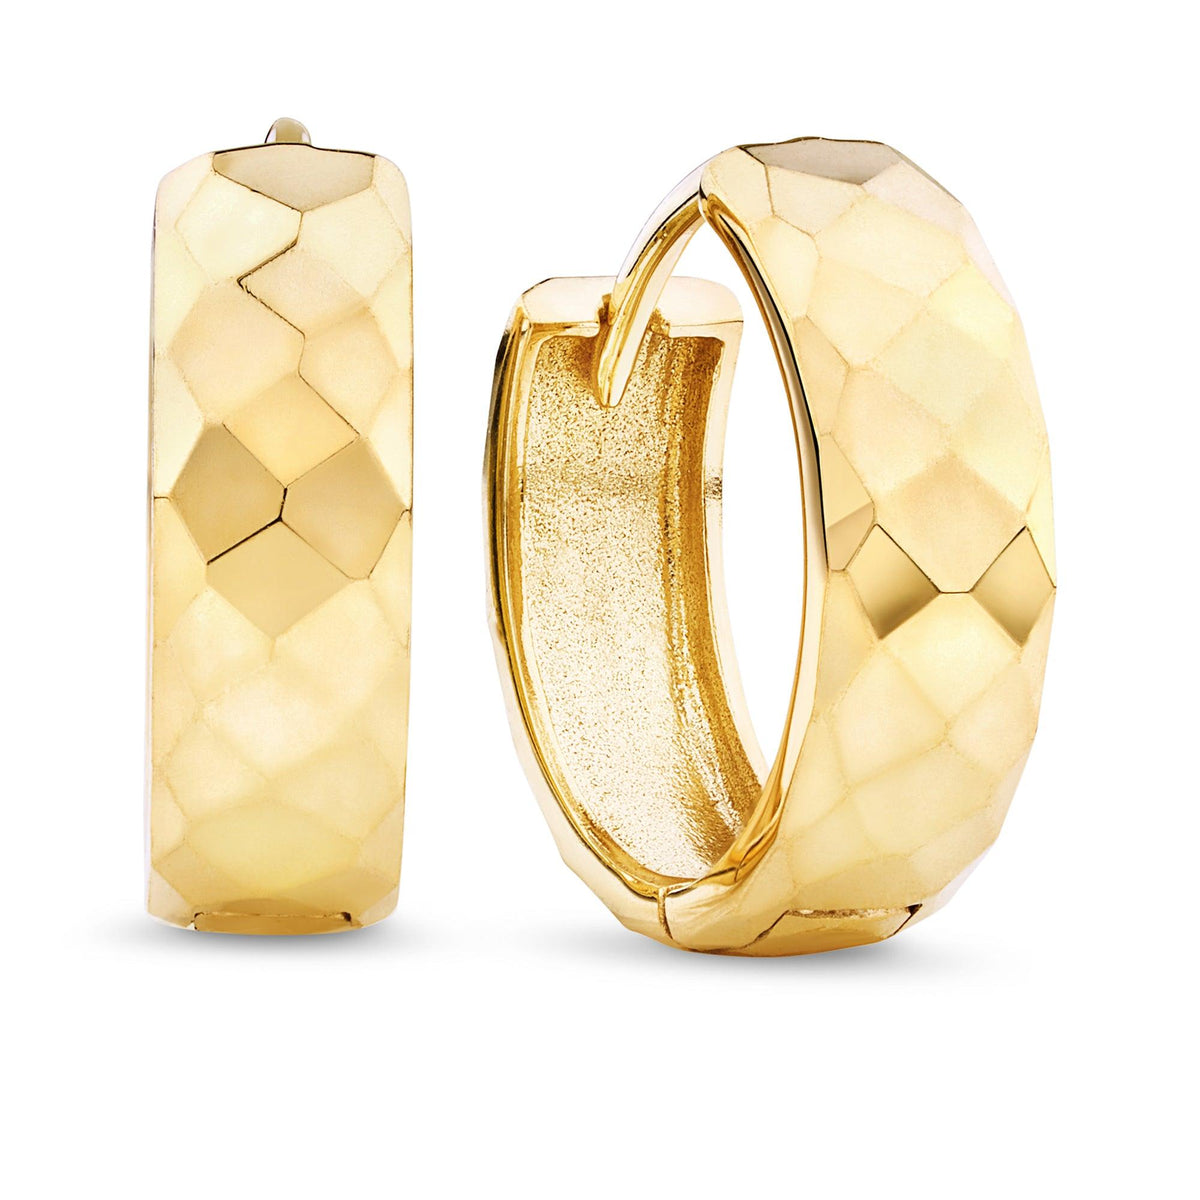 Geometric Cut Huggie Earrings in 9ct Yellow Gold - Wallace Bishop